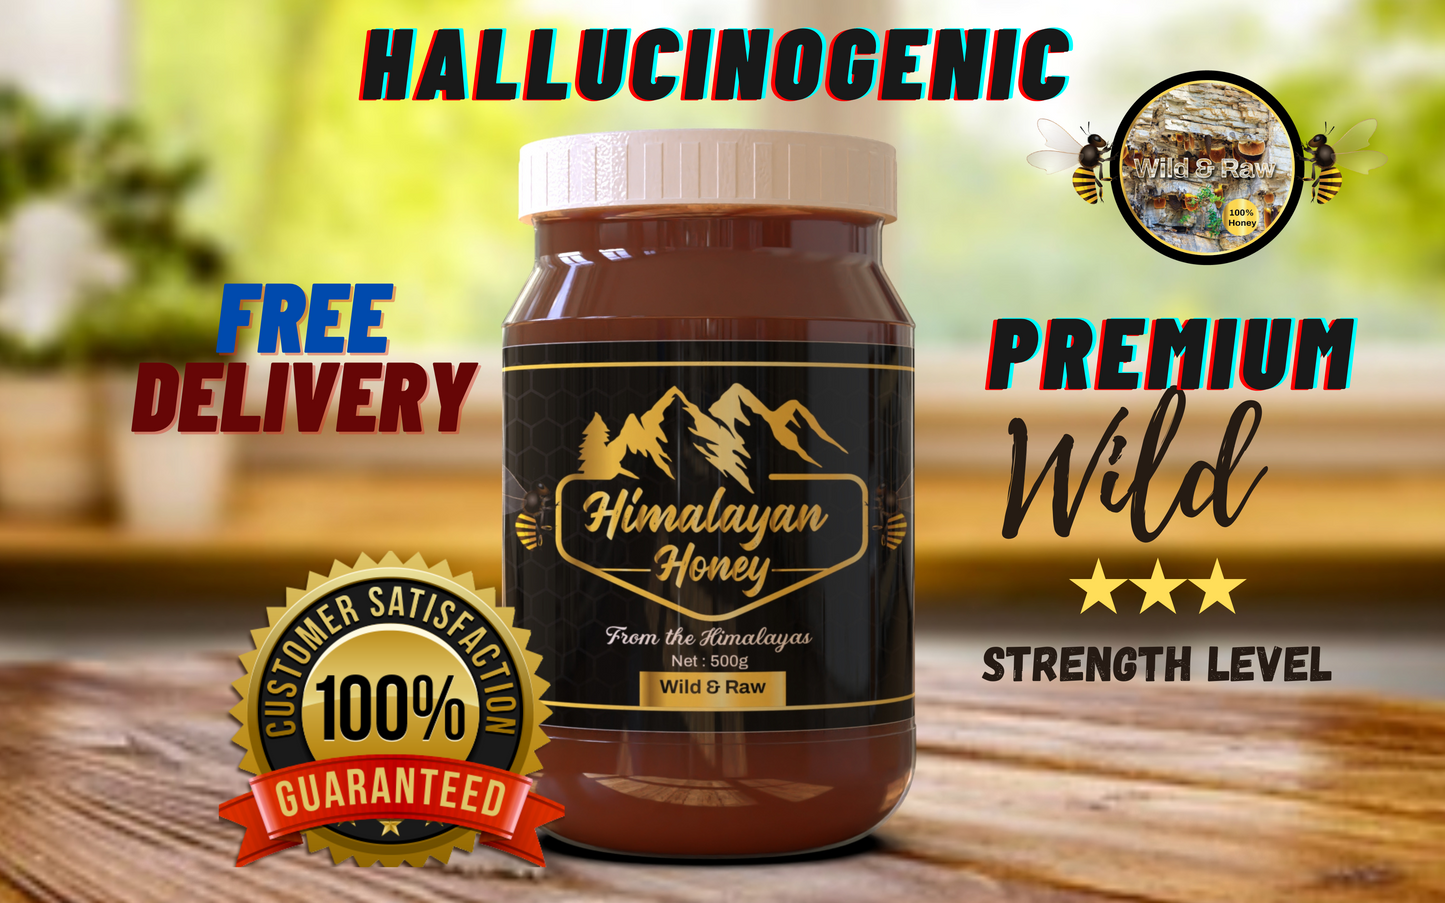 Mad Honey Himalayan premium 500g Silver range Nepal